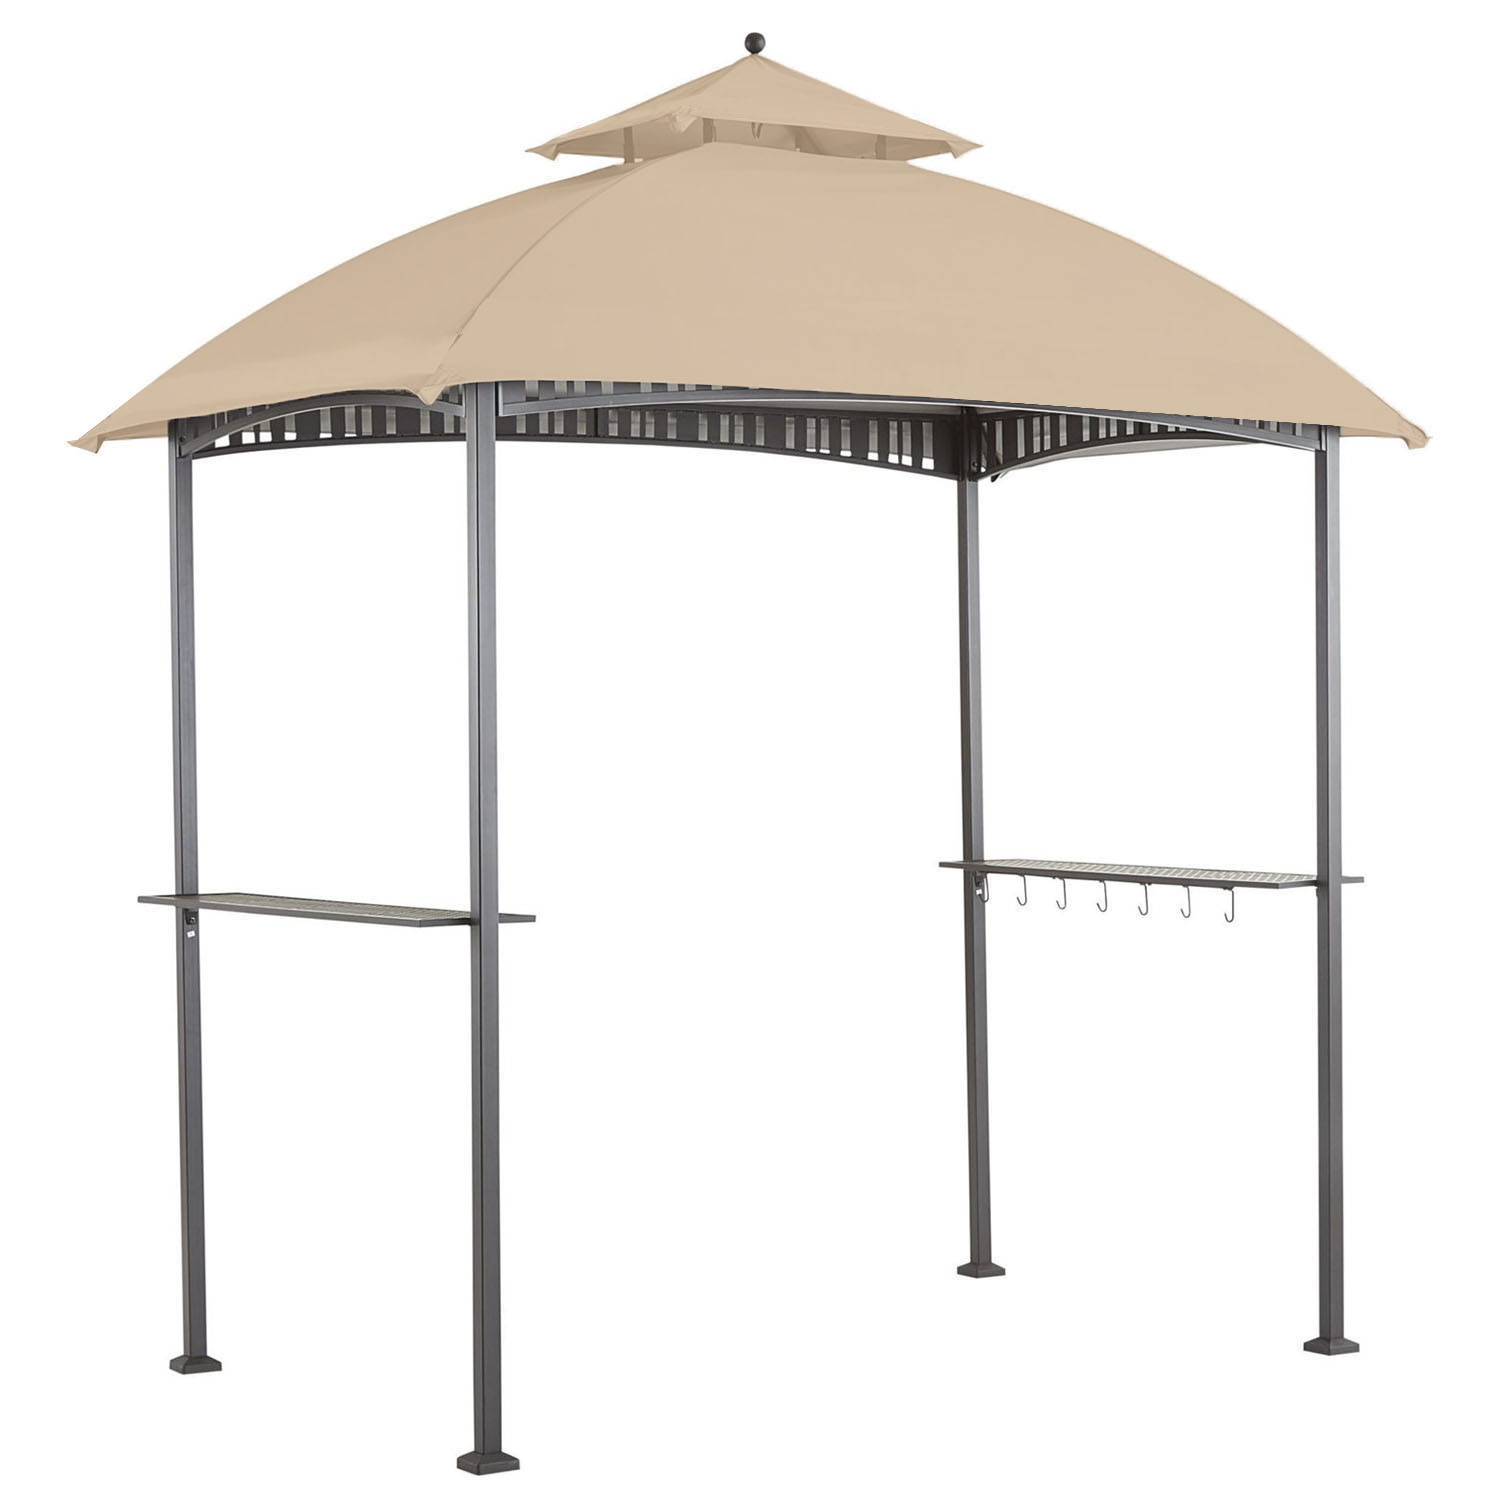 Replacement Canopy for Promenade Grill Gazebo - Riplock 350